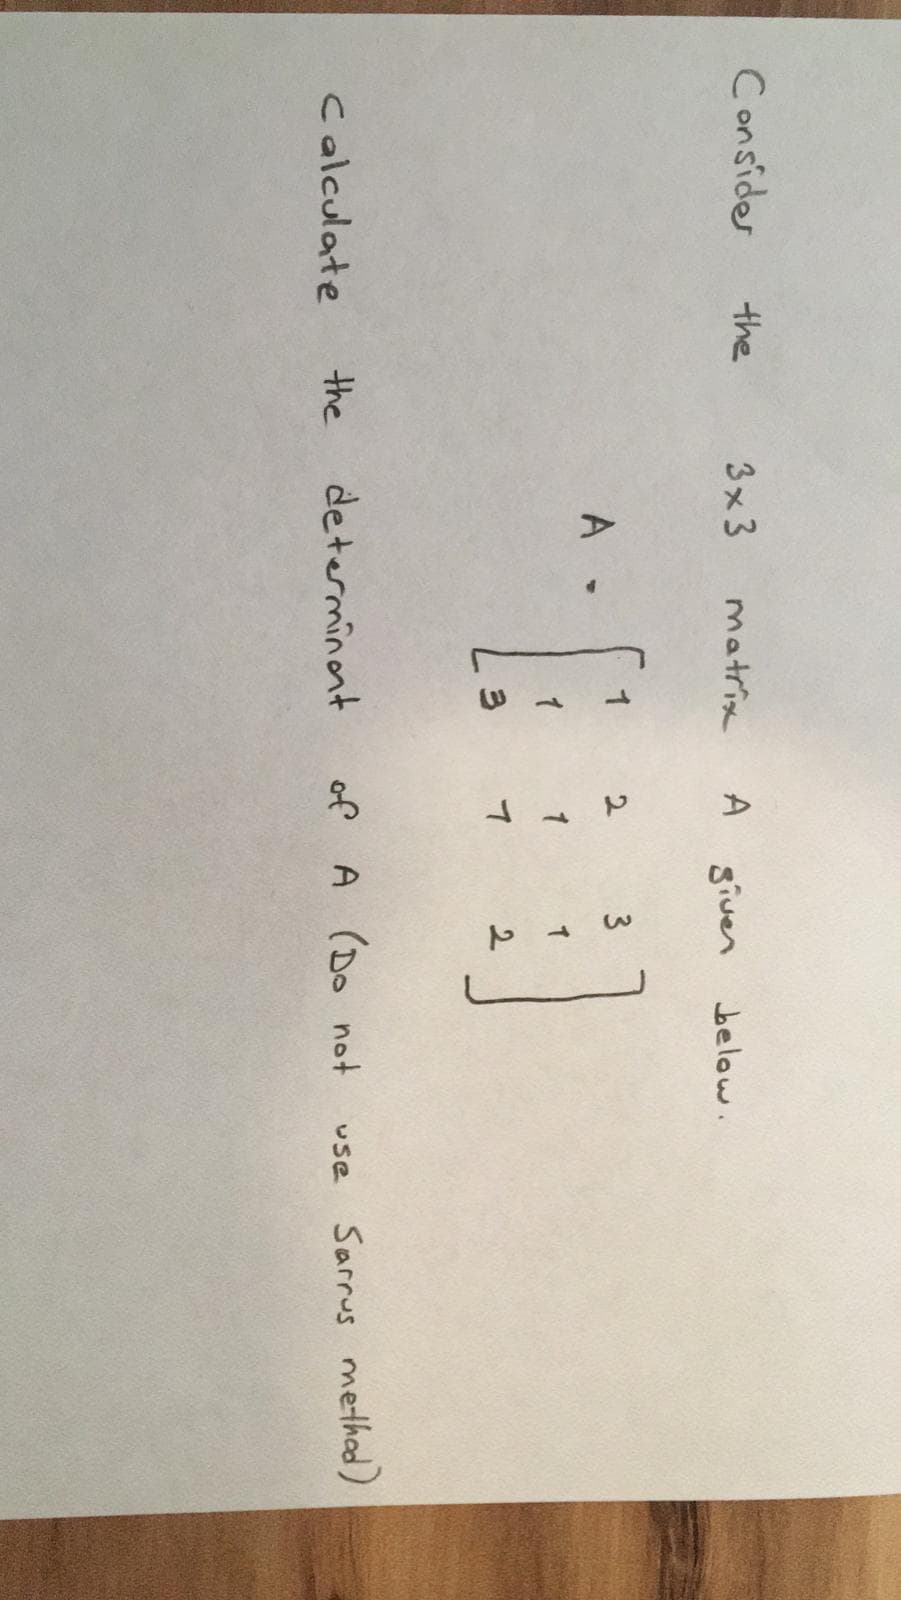 he
3x3
matrix
A siven
below.
1
2
A -
1
2.
the
determinont
of A (Do not
Sarrus n
Use
